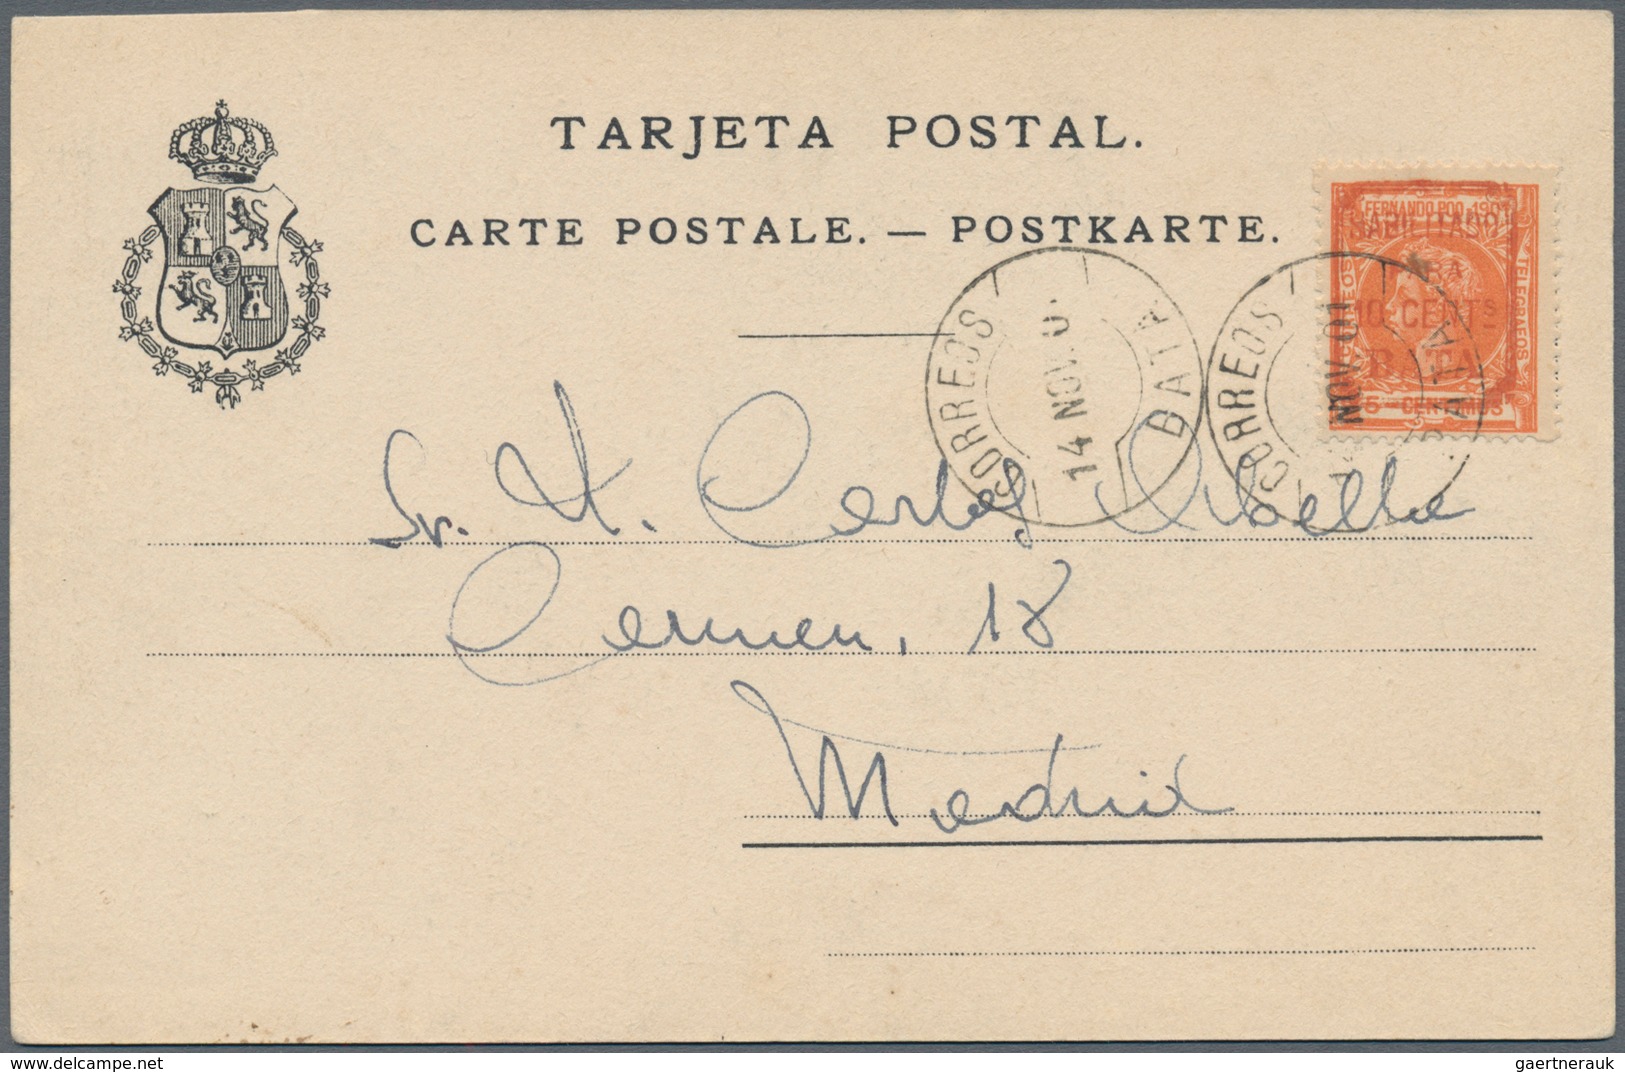 00493 Spanisch-Guinea: Bata, 1901, 1 C.-10 P. surcharged "HABILITADO PARA 10 CENTS BATA", 14 values each a